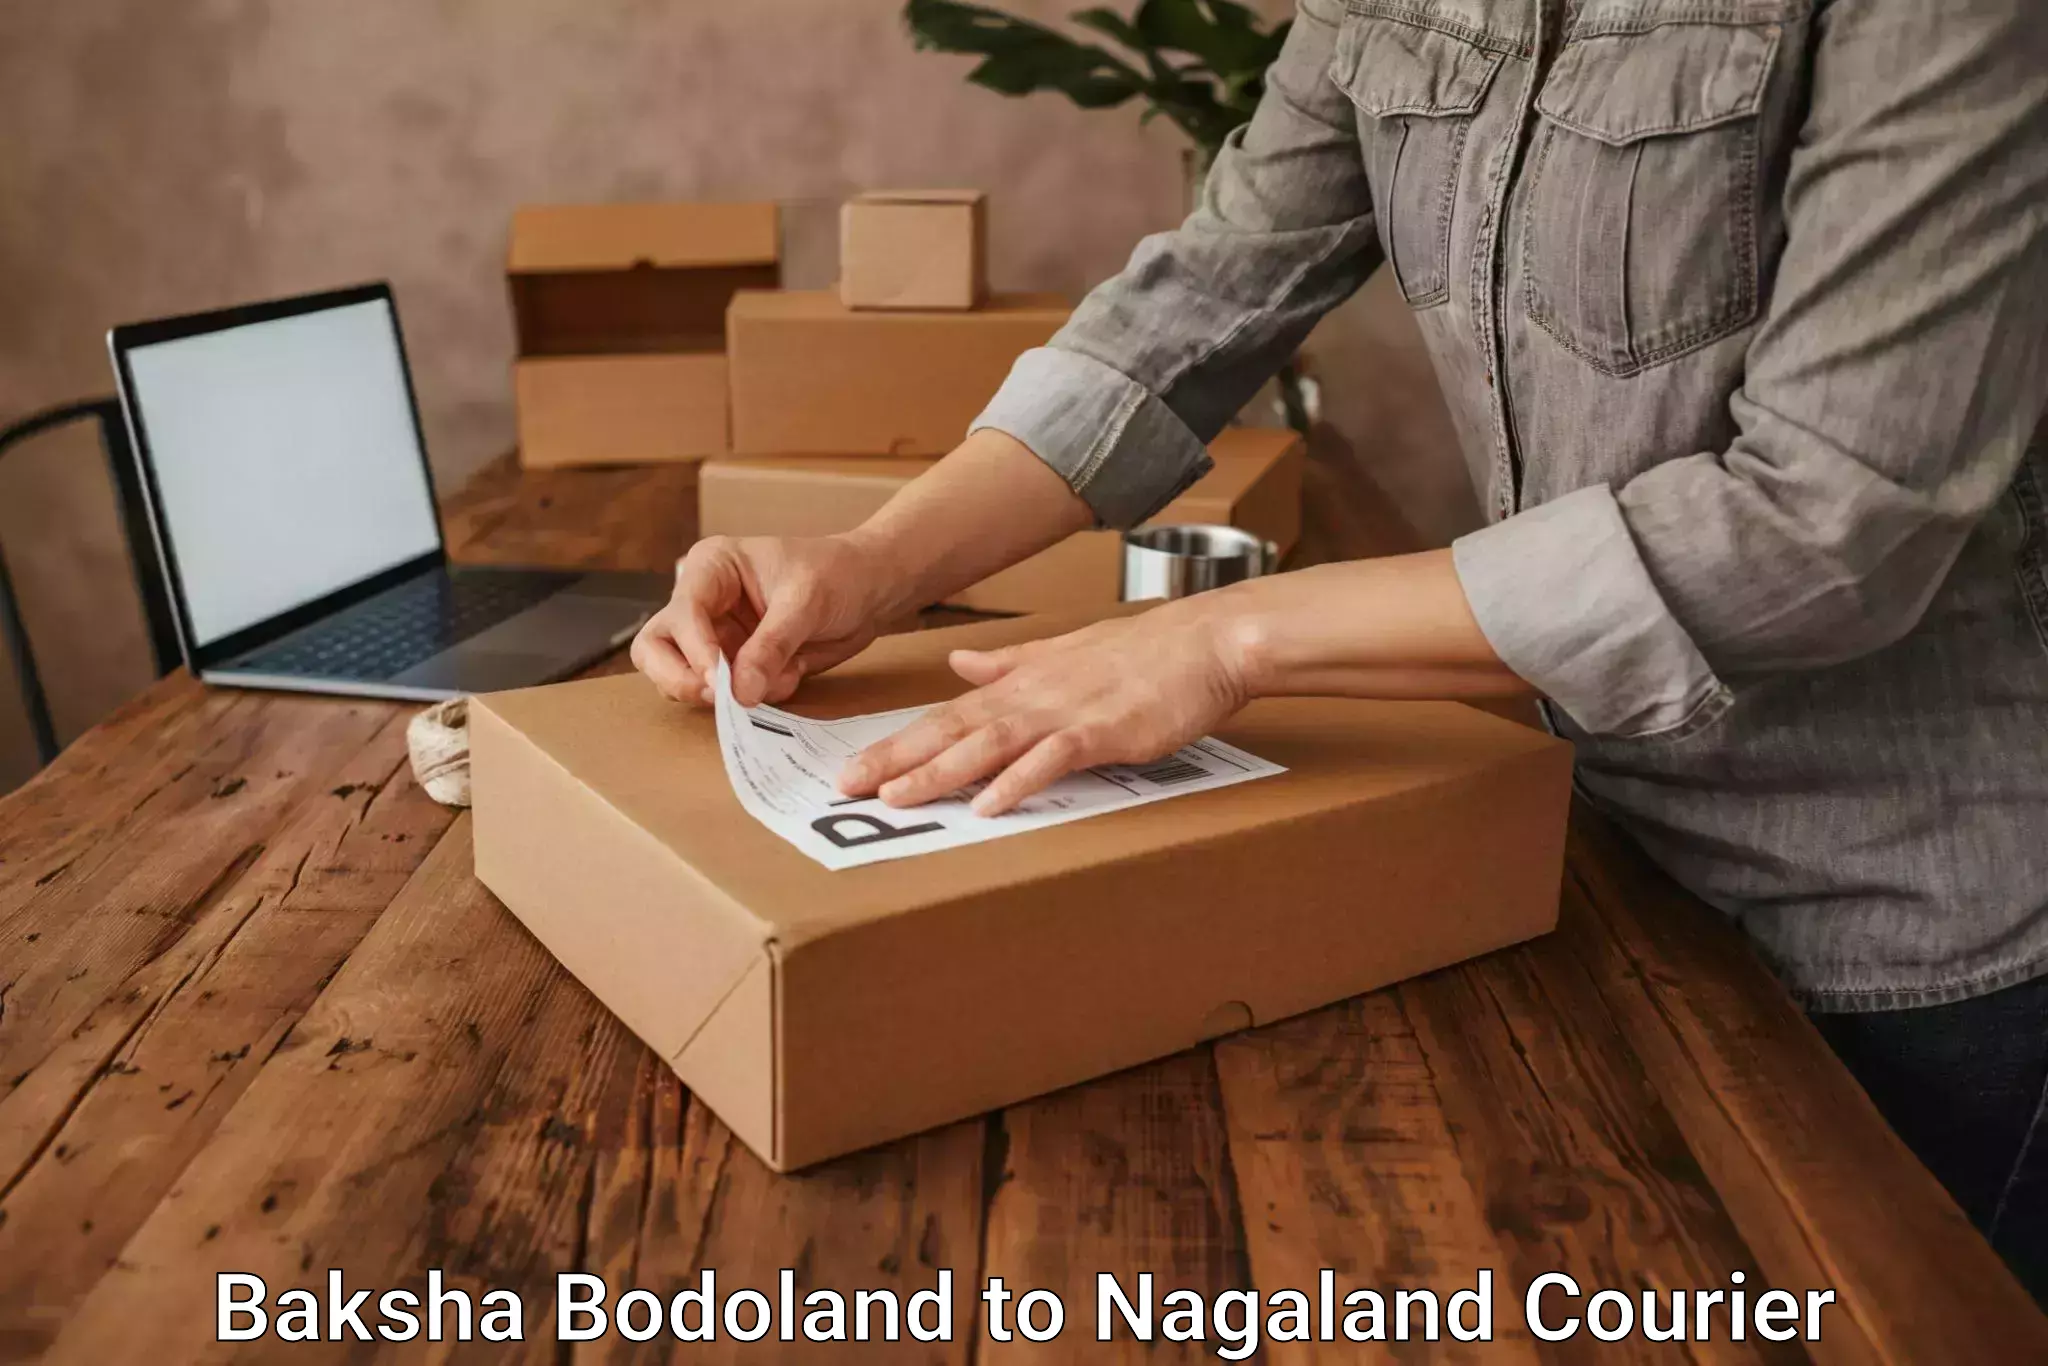 Reliable delivery network Baksha Bodoland to Nagaland